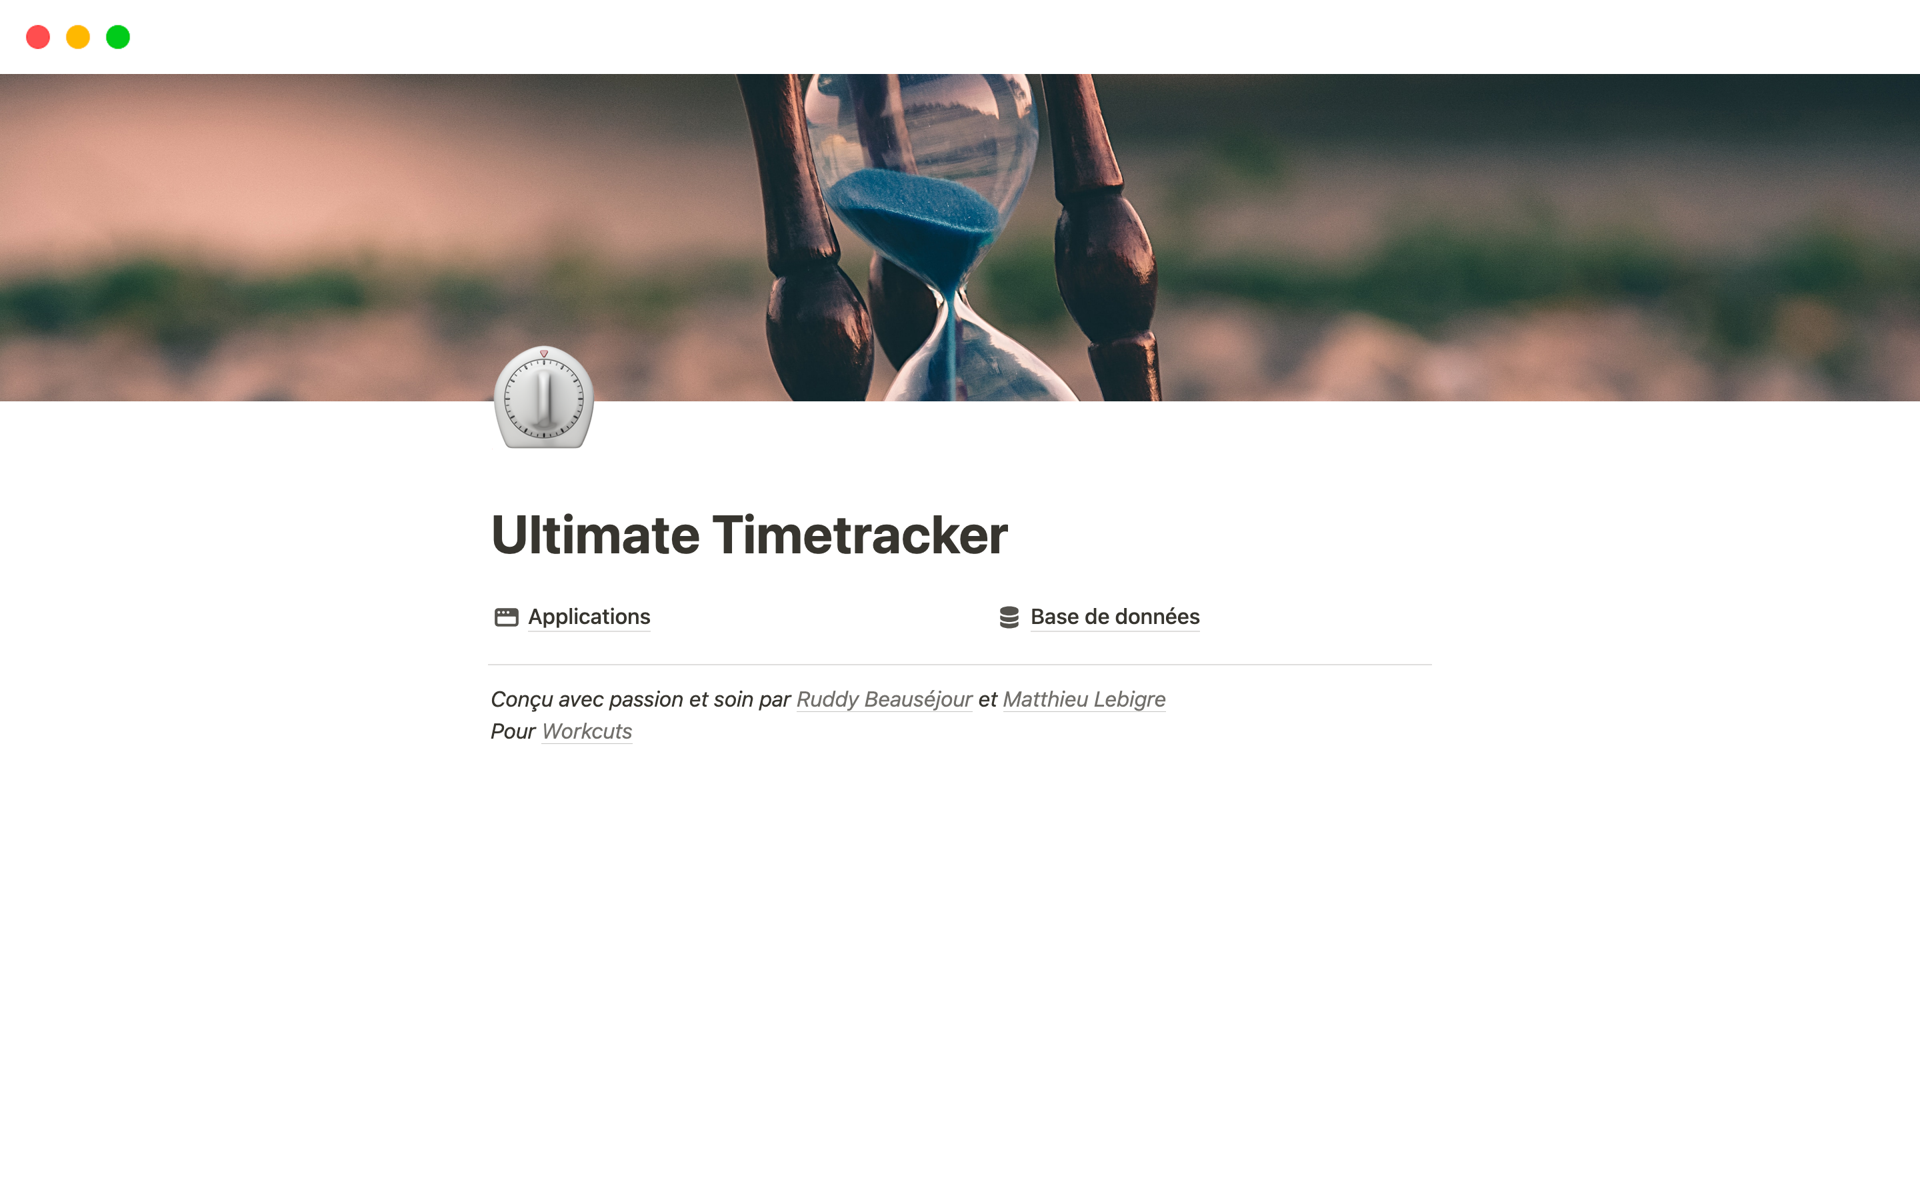 Vista previa de plantilla para Ultimate Timetracker